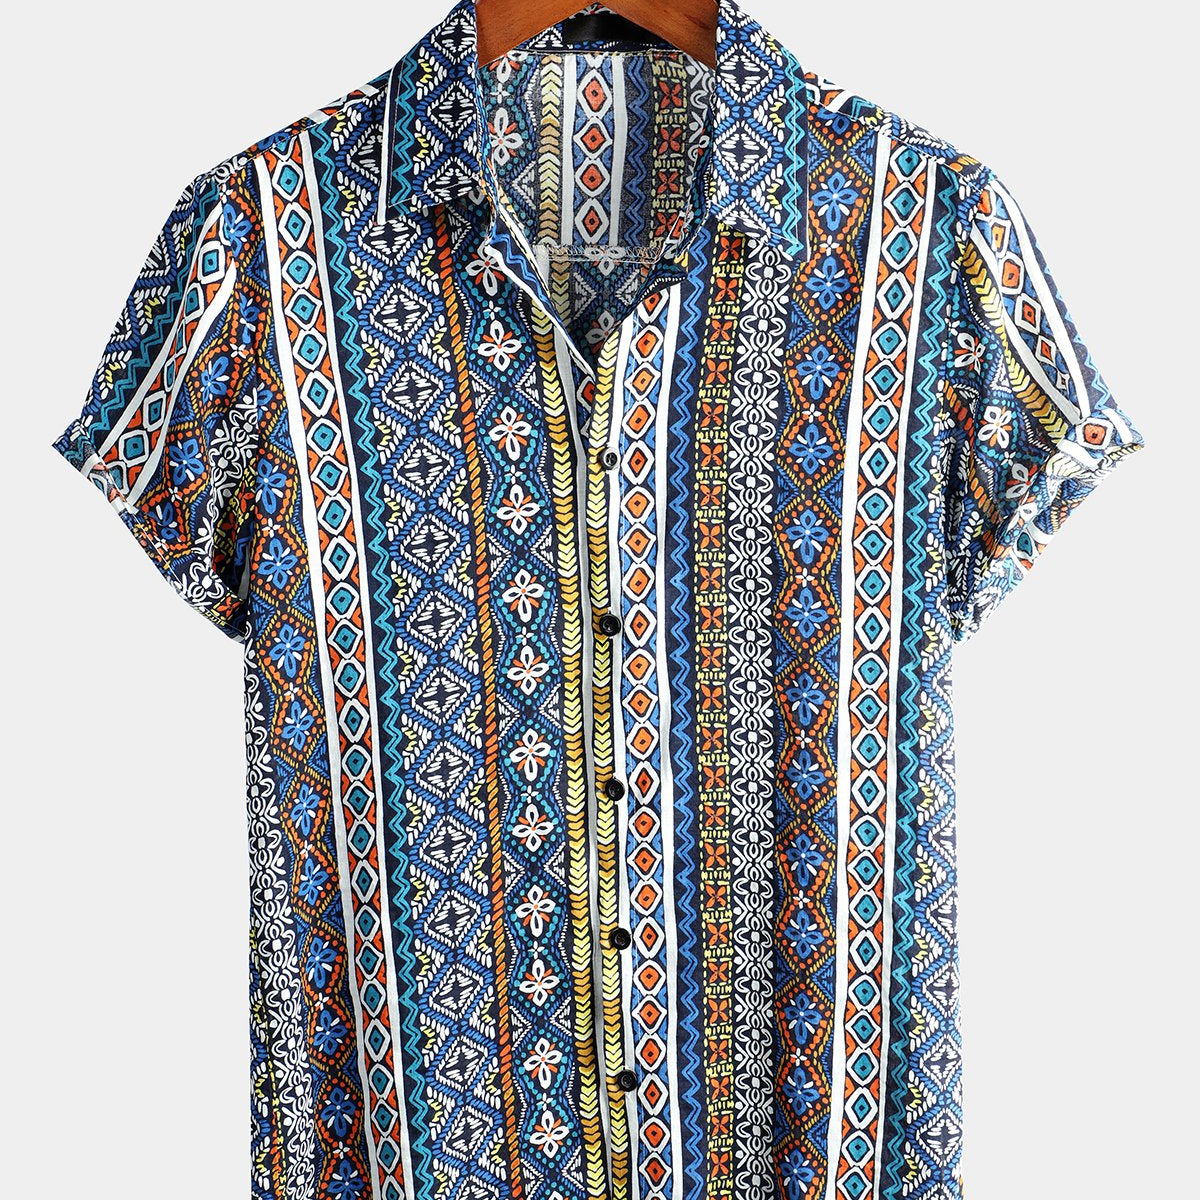 Men's Patchwork Printed Short Sleeve Cotton Shirt